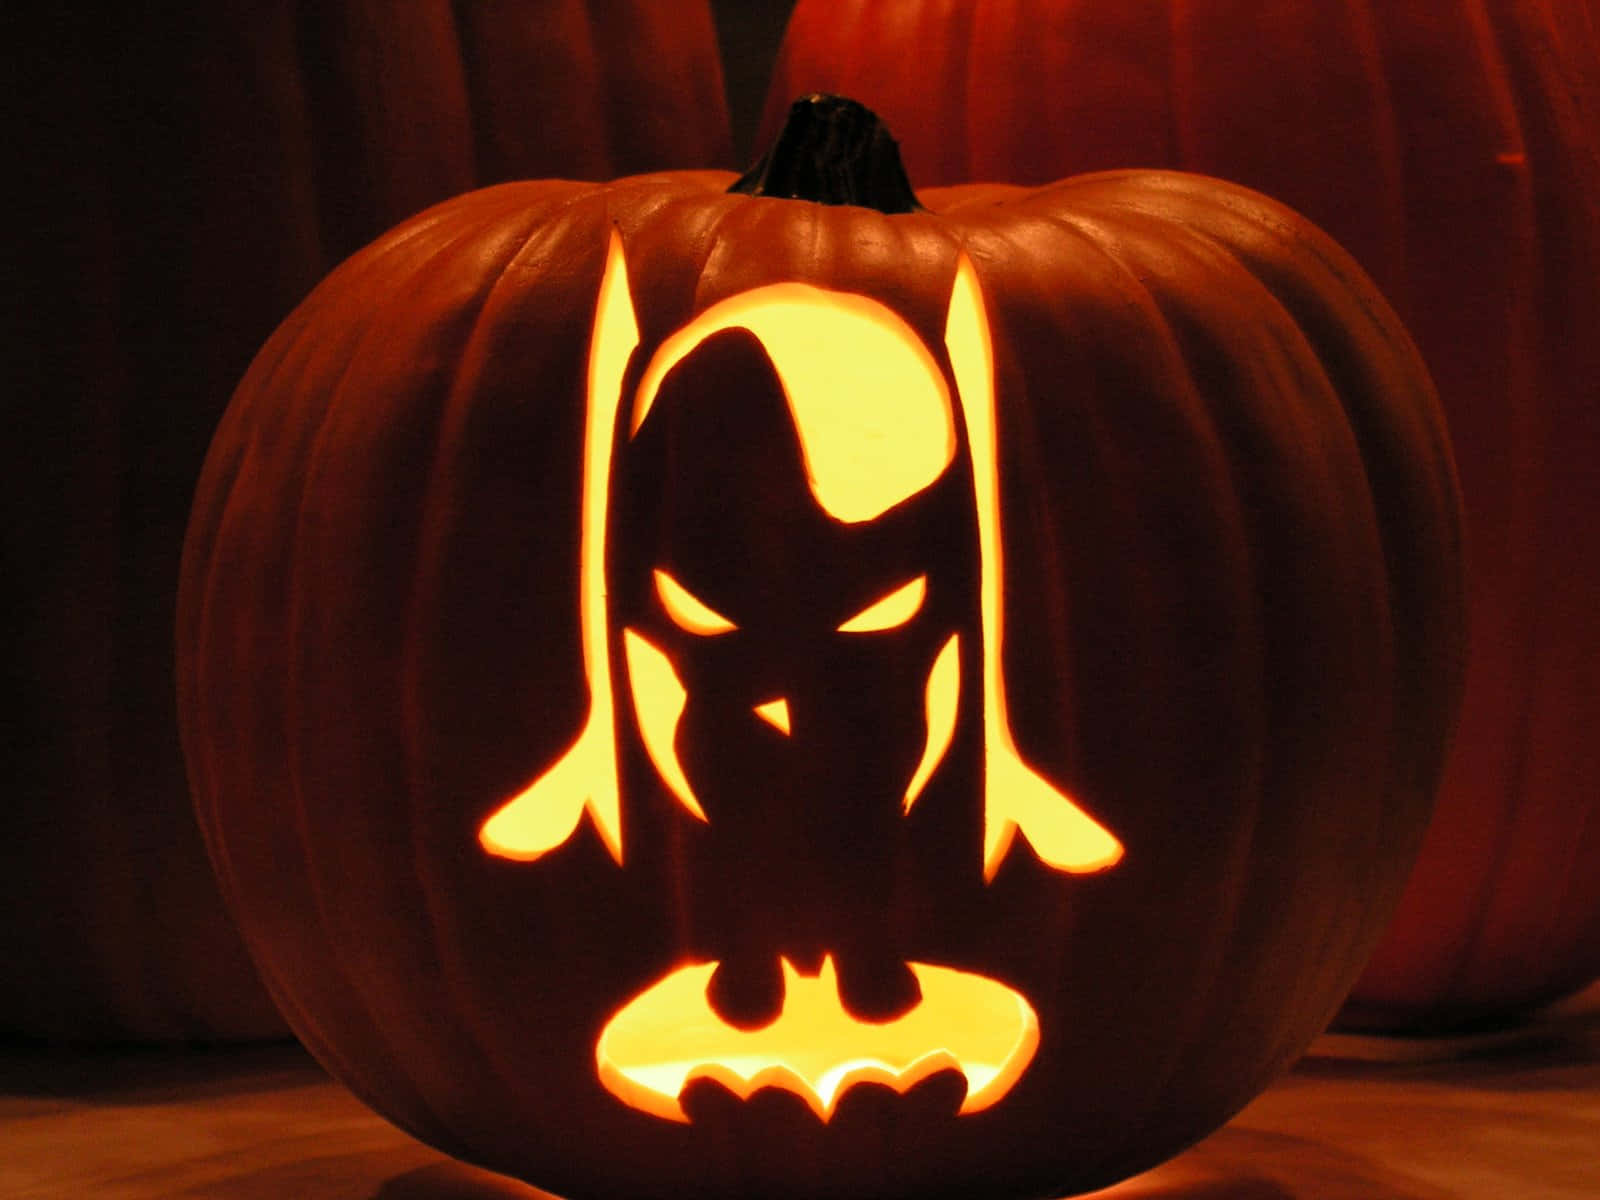 A Uniquely Carved Pumpkin: A Friendly Jack-O'-Lantern